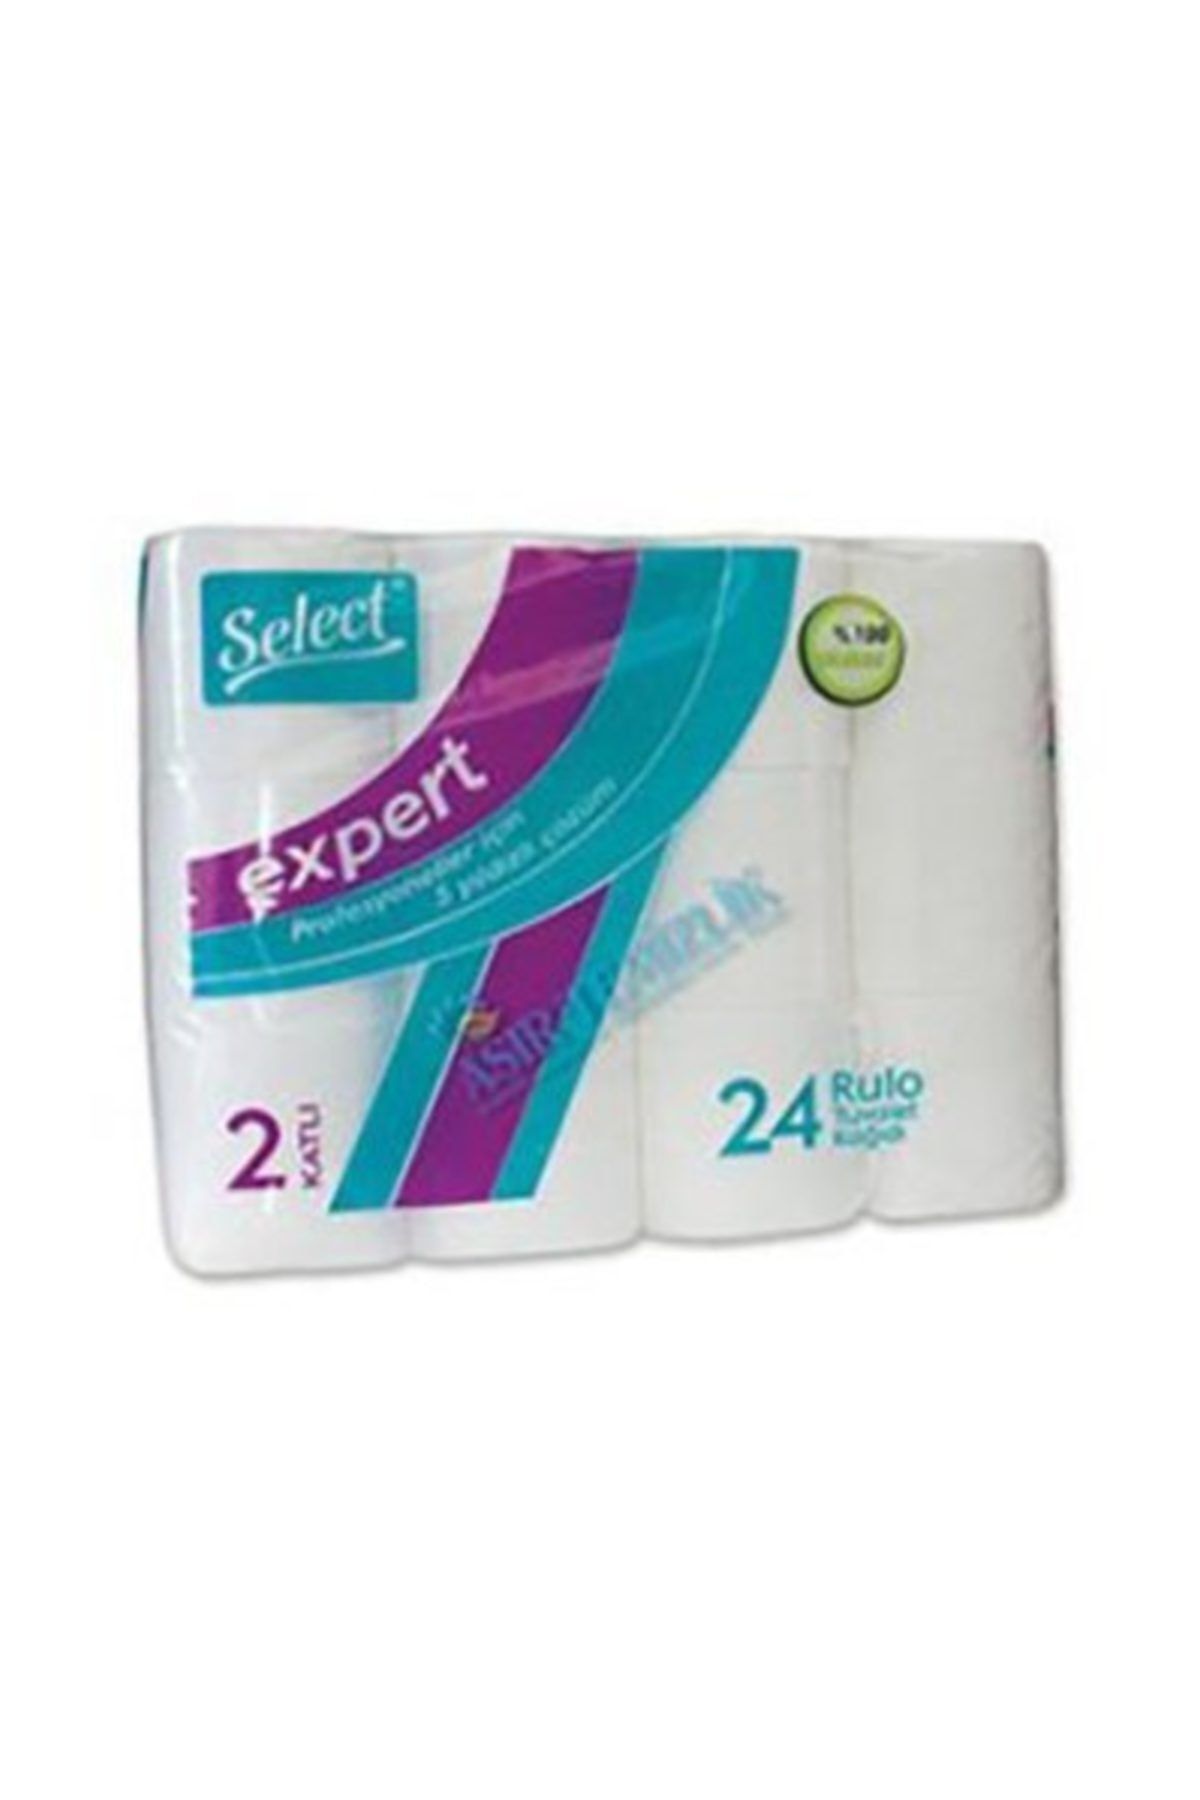 SELECT Expert Professiyonel Tuvalet Kağıdı 24'lü